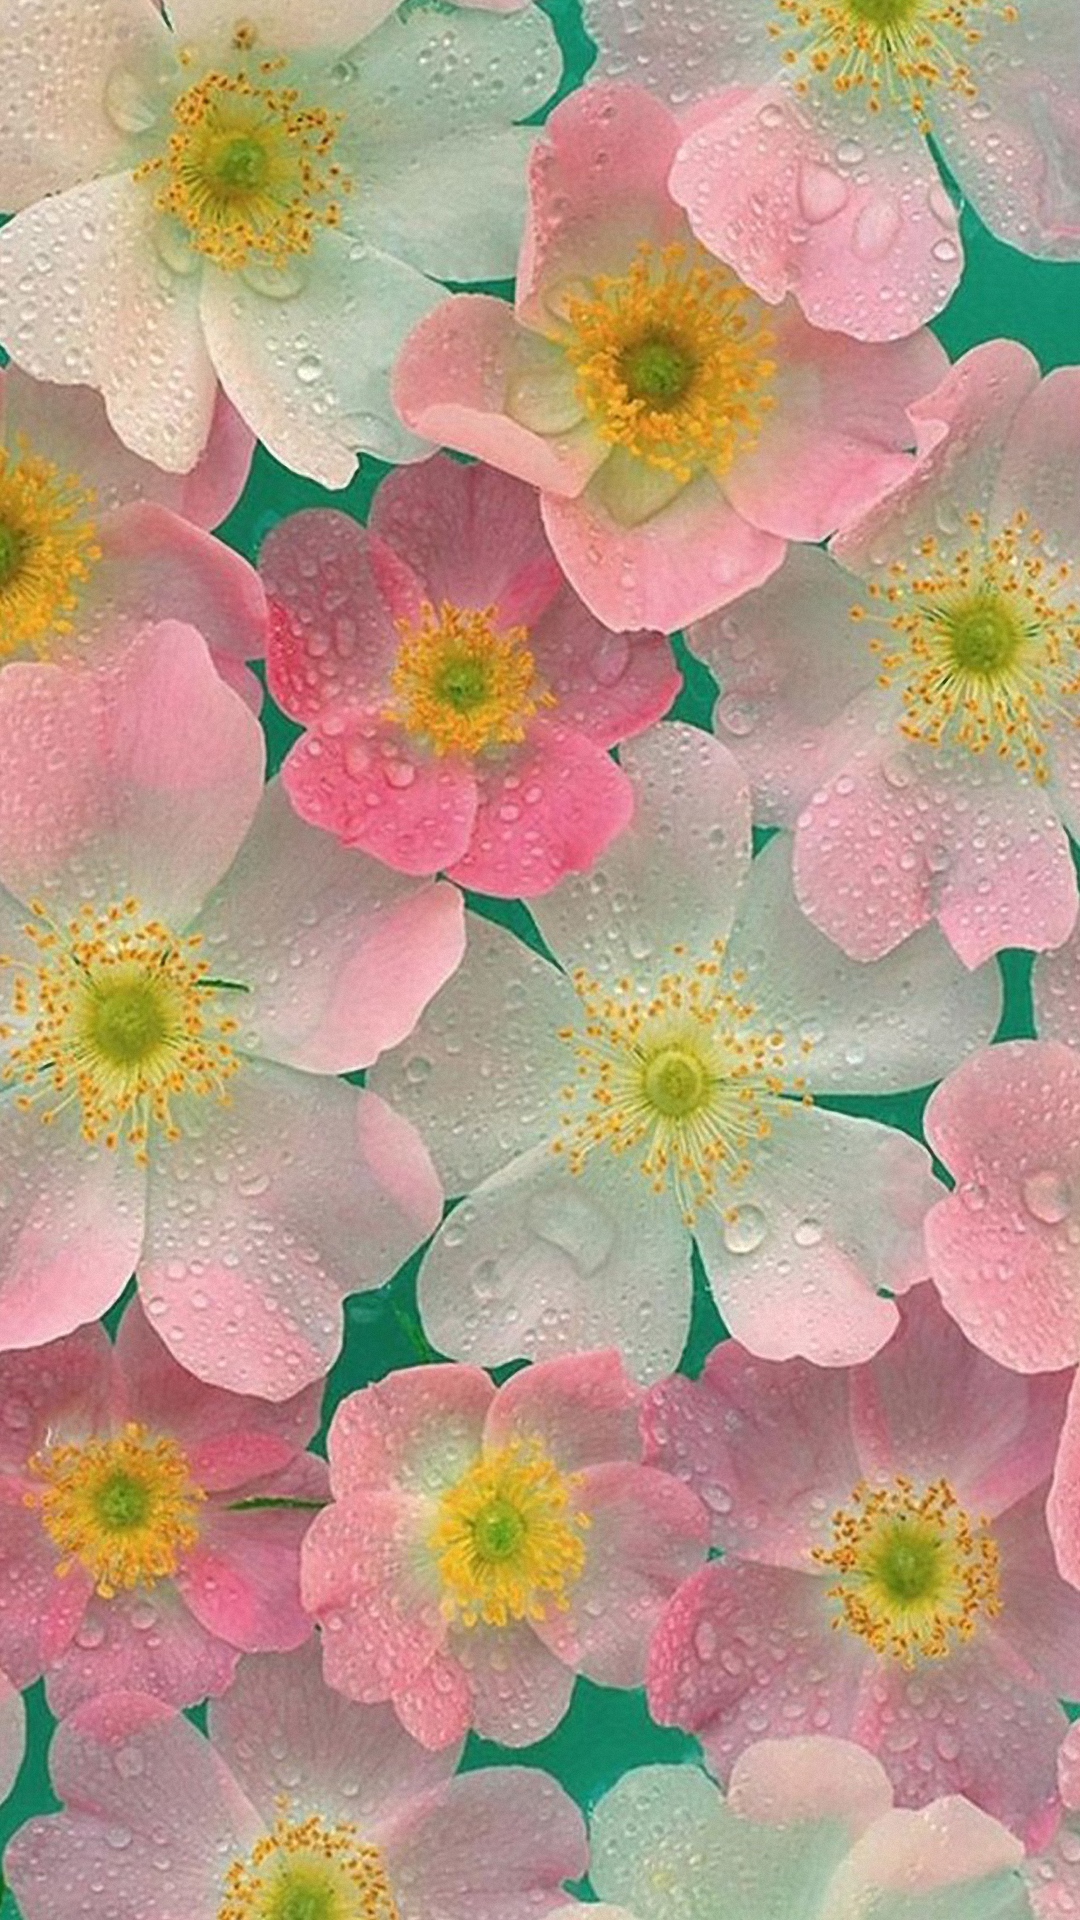 Colorful Flower Petals HD Wallpapers - Wallpaper Cave